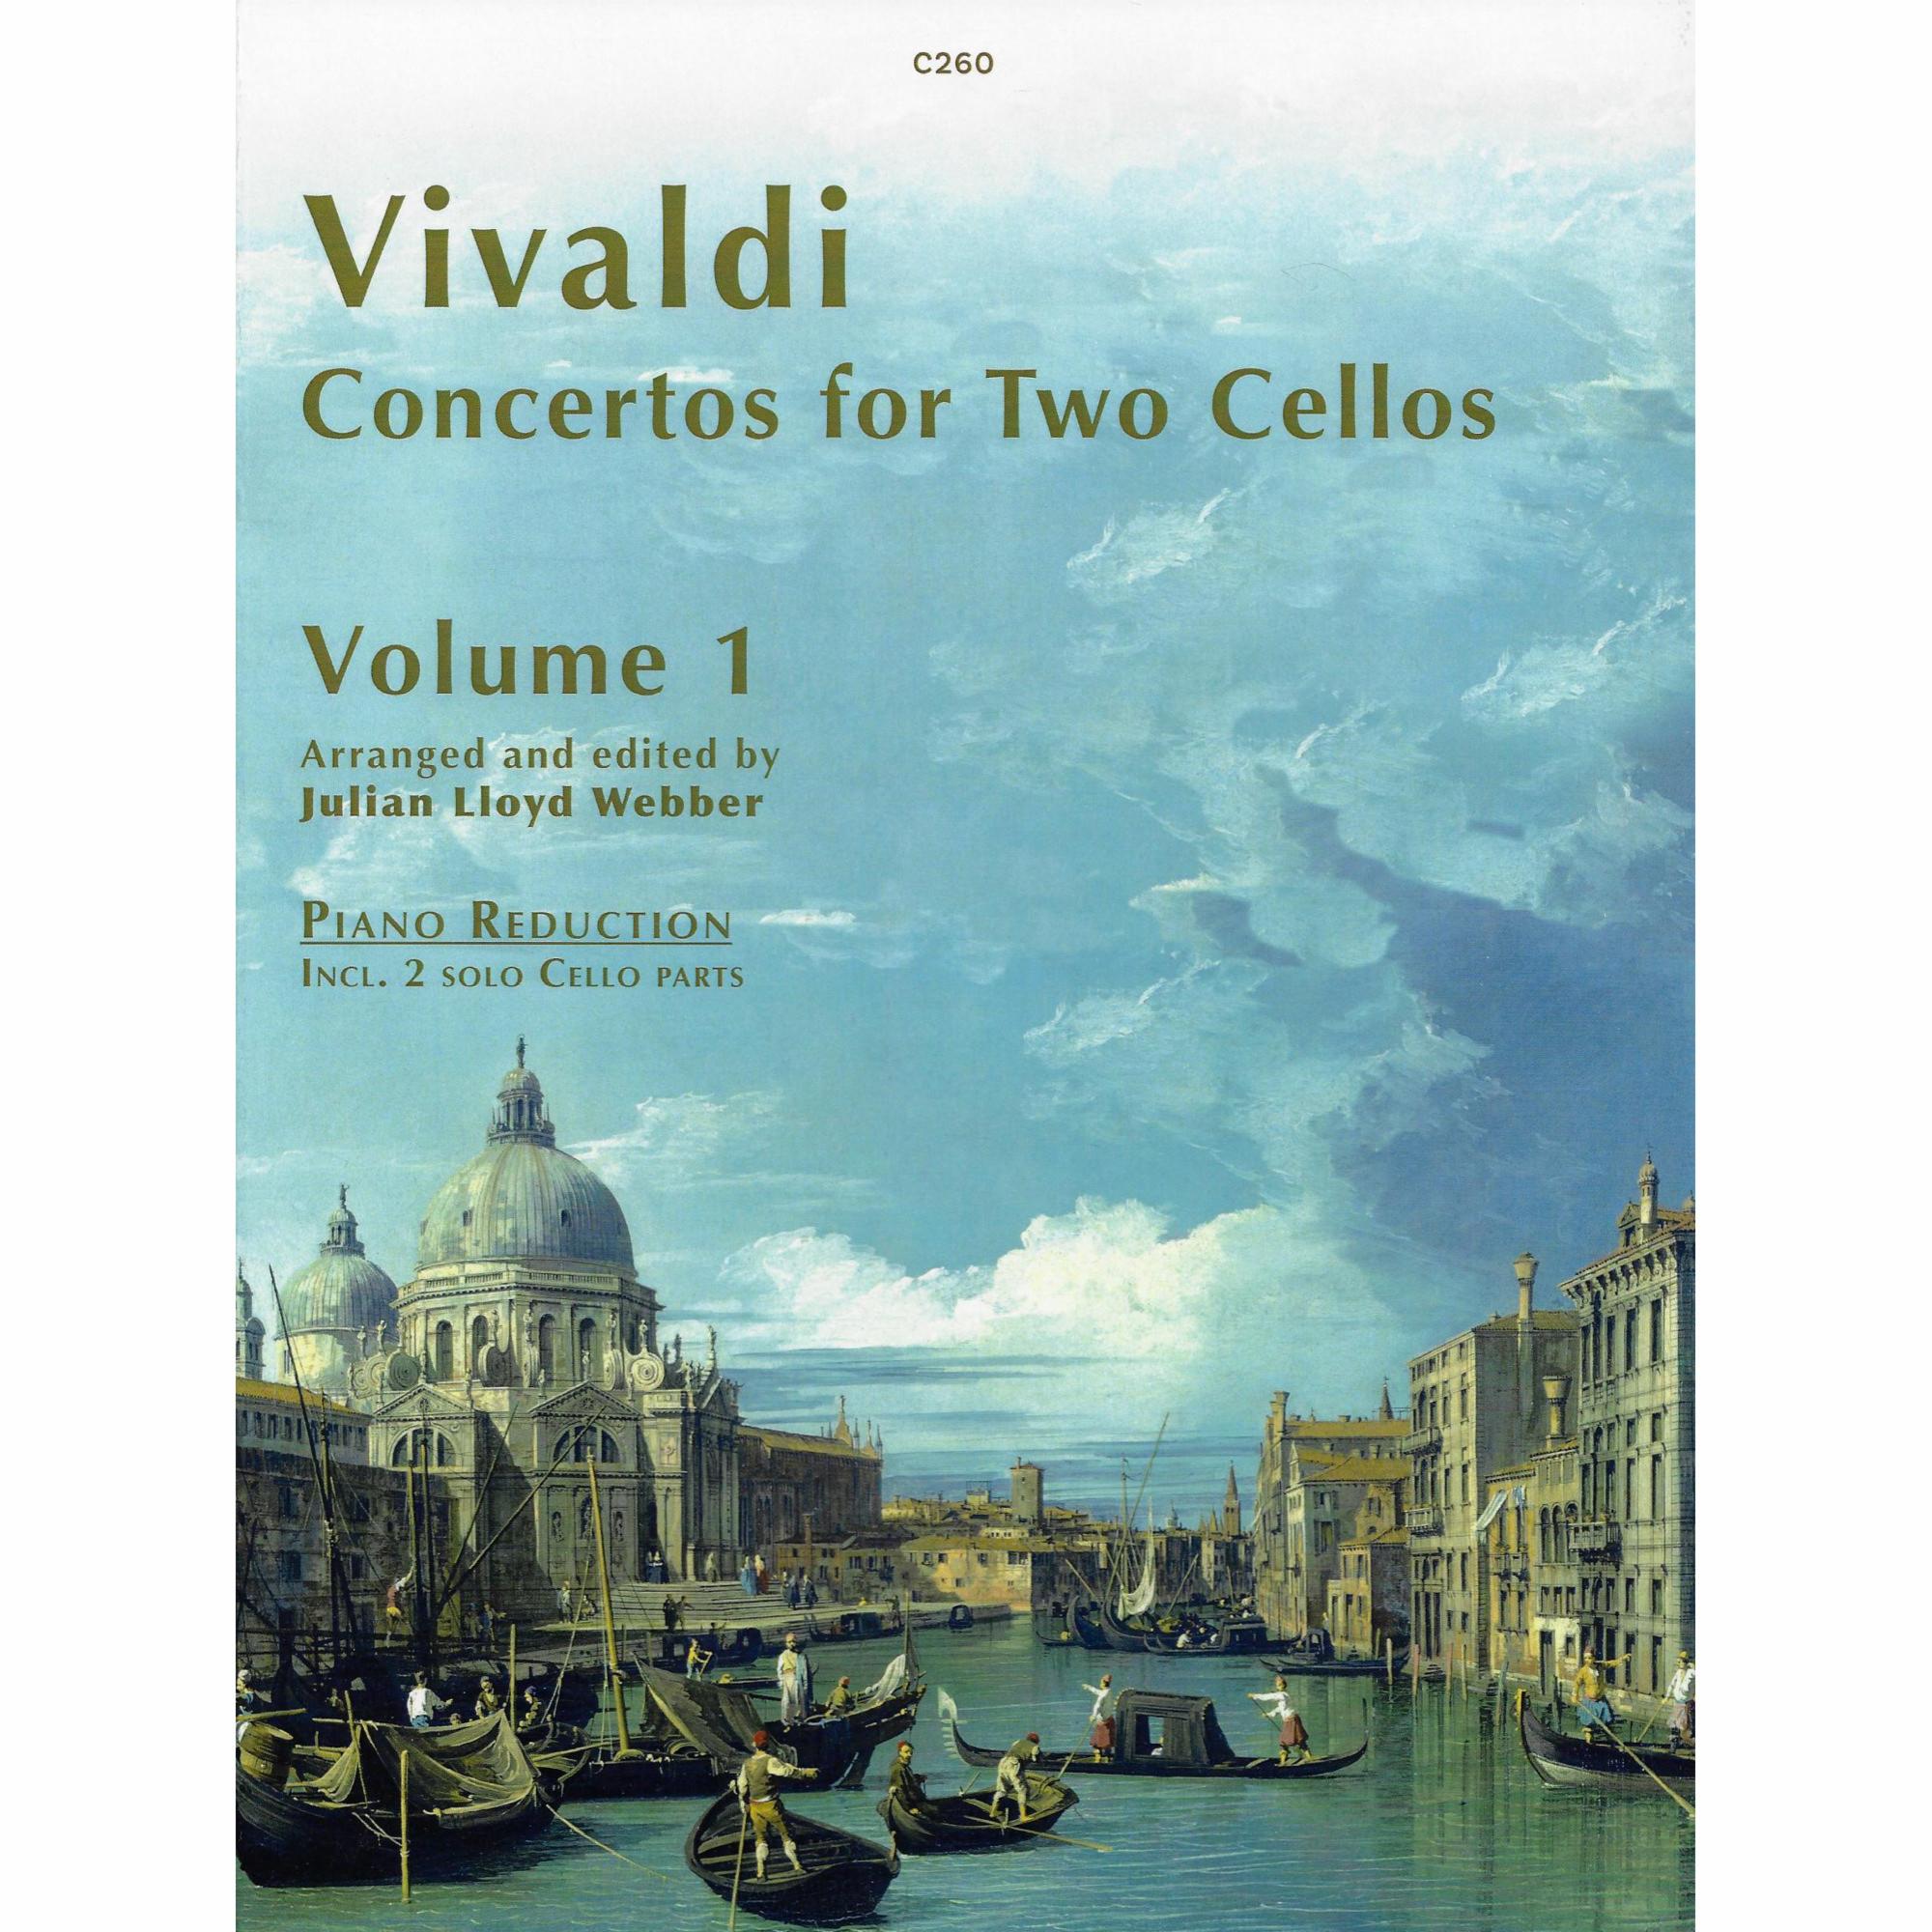 Vivaldi -- Concertos for Two Cellos, Volumes 1 & 2